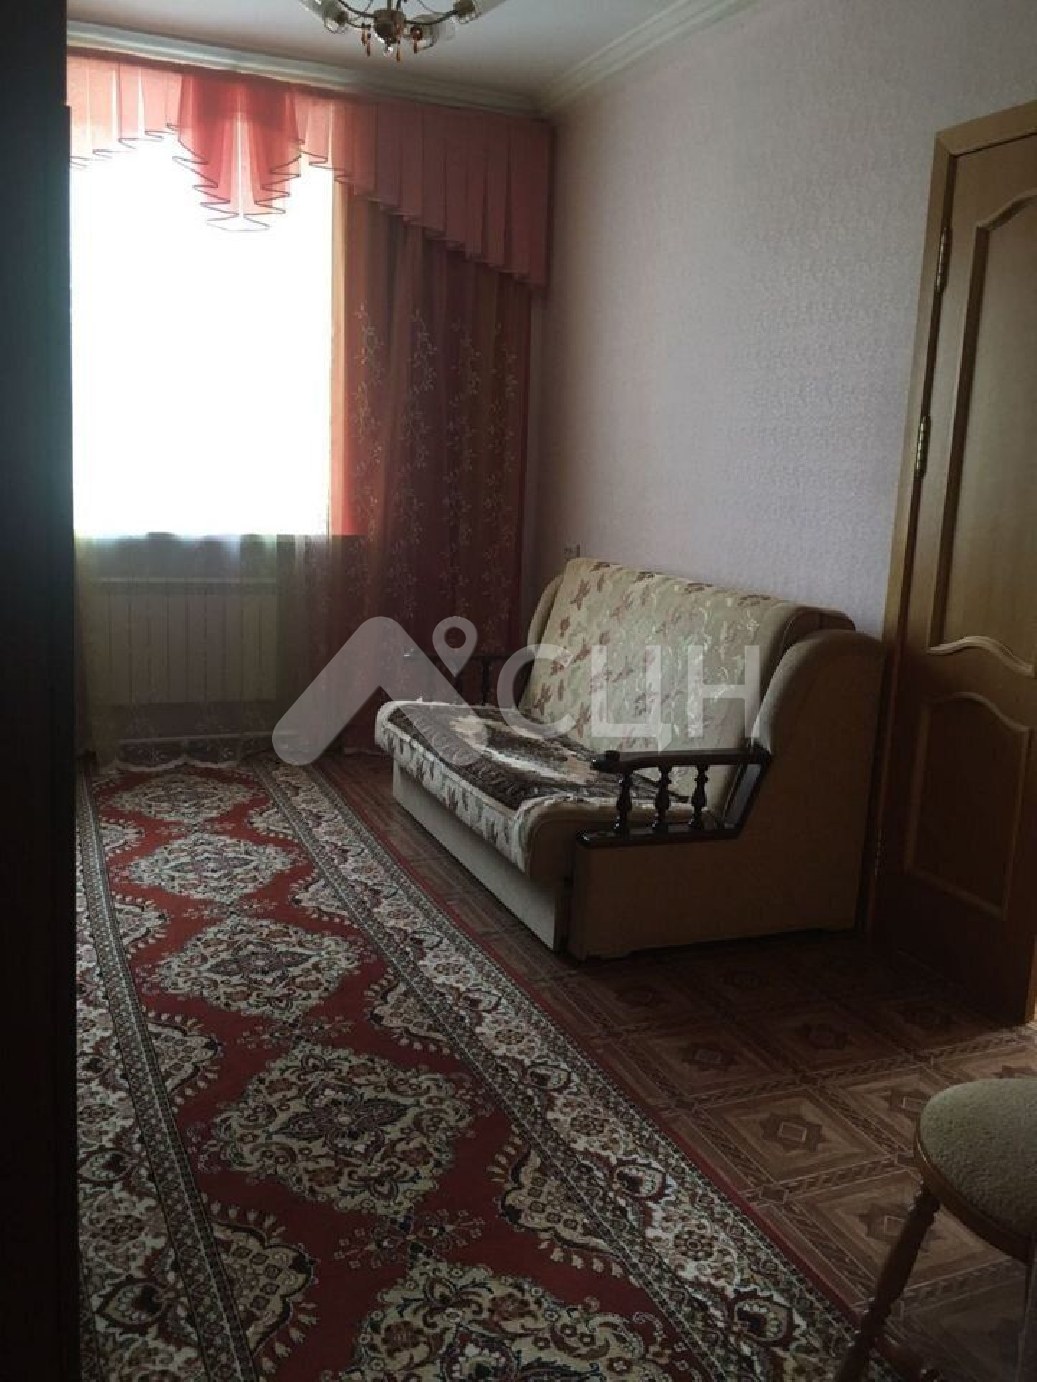 продажа квартир саров
: Г. Саров, проспект Ленина, 8, 3-комн квартира, этаж 1 из 4, продажа.